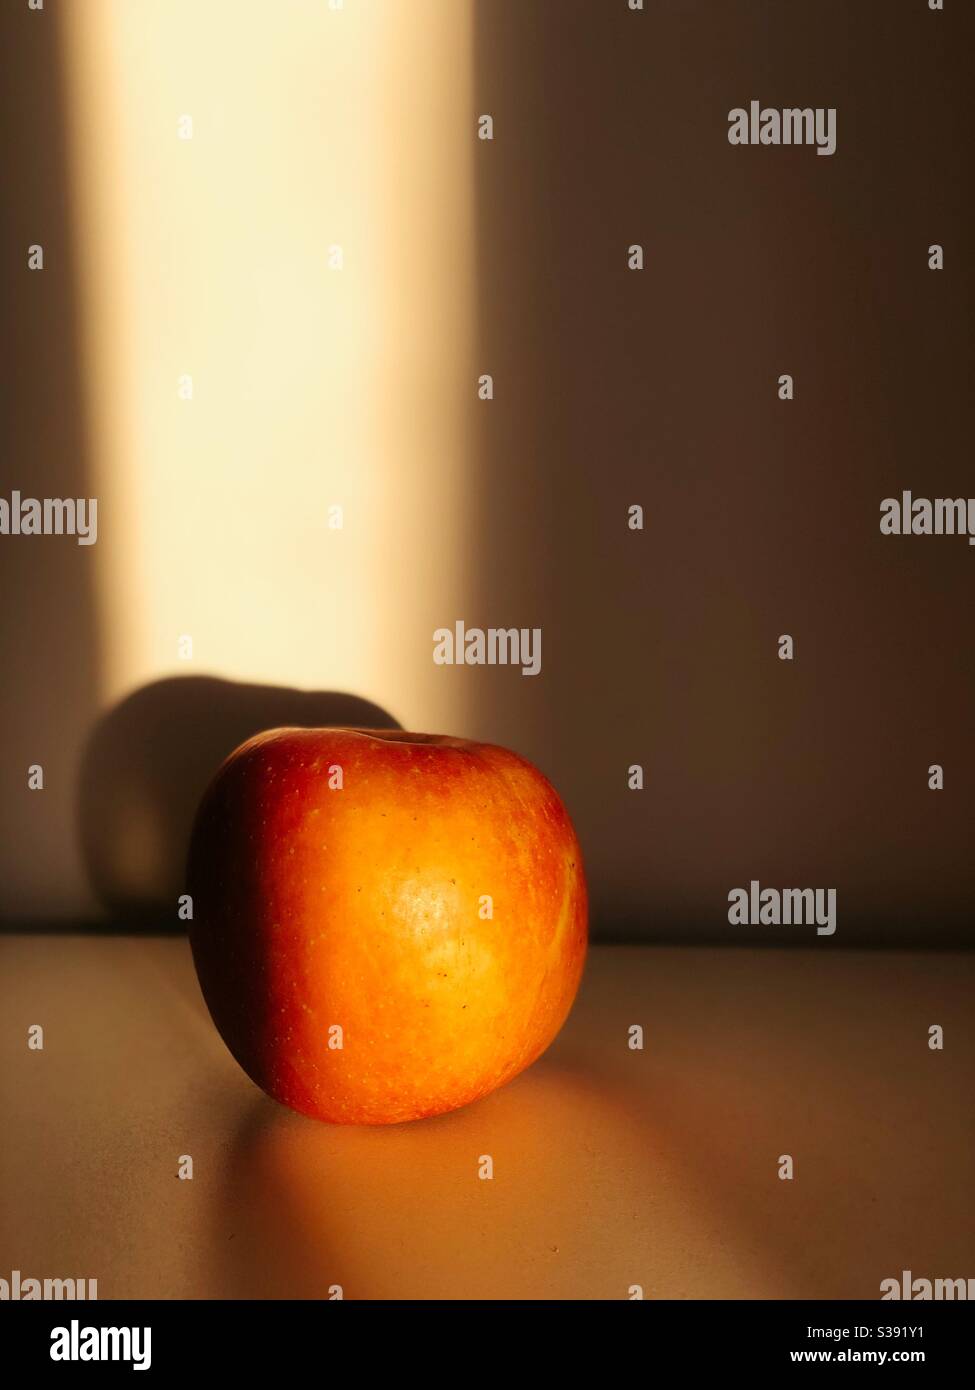 An apple on the table Stock Photo